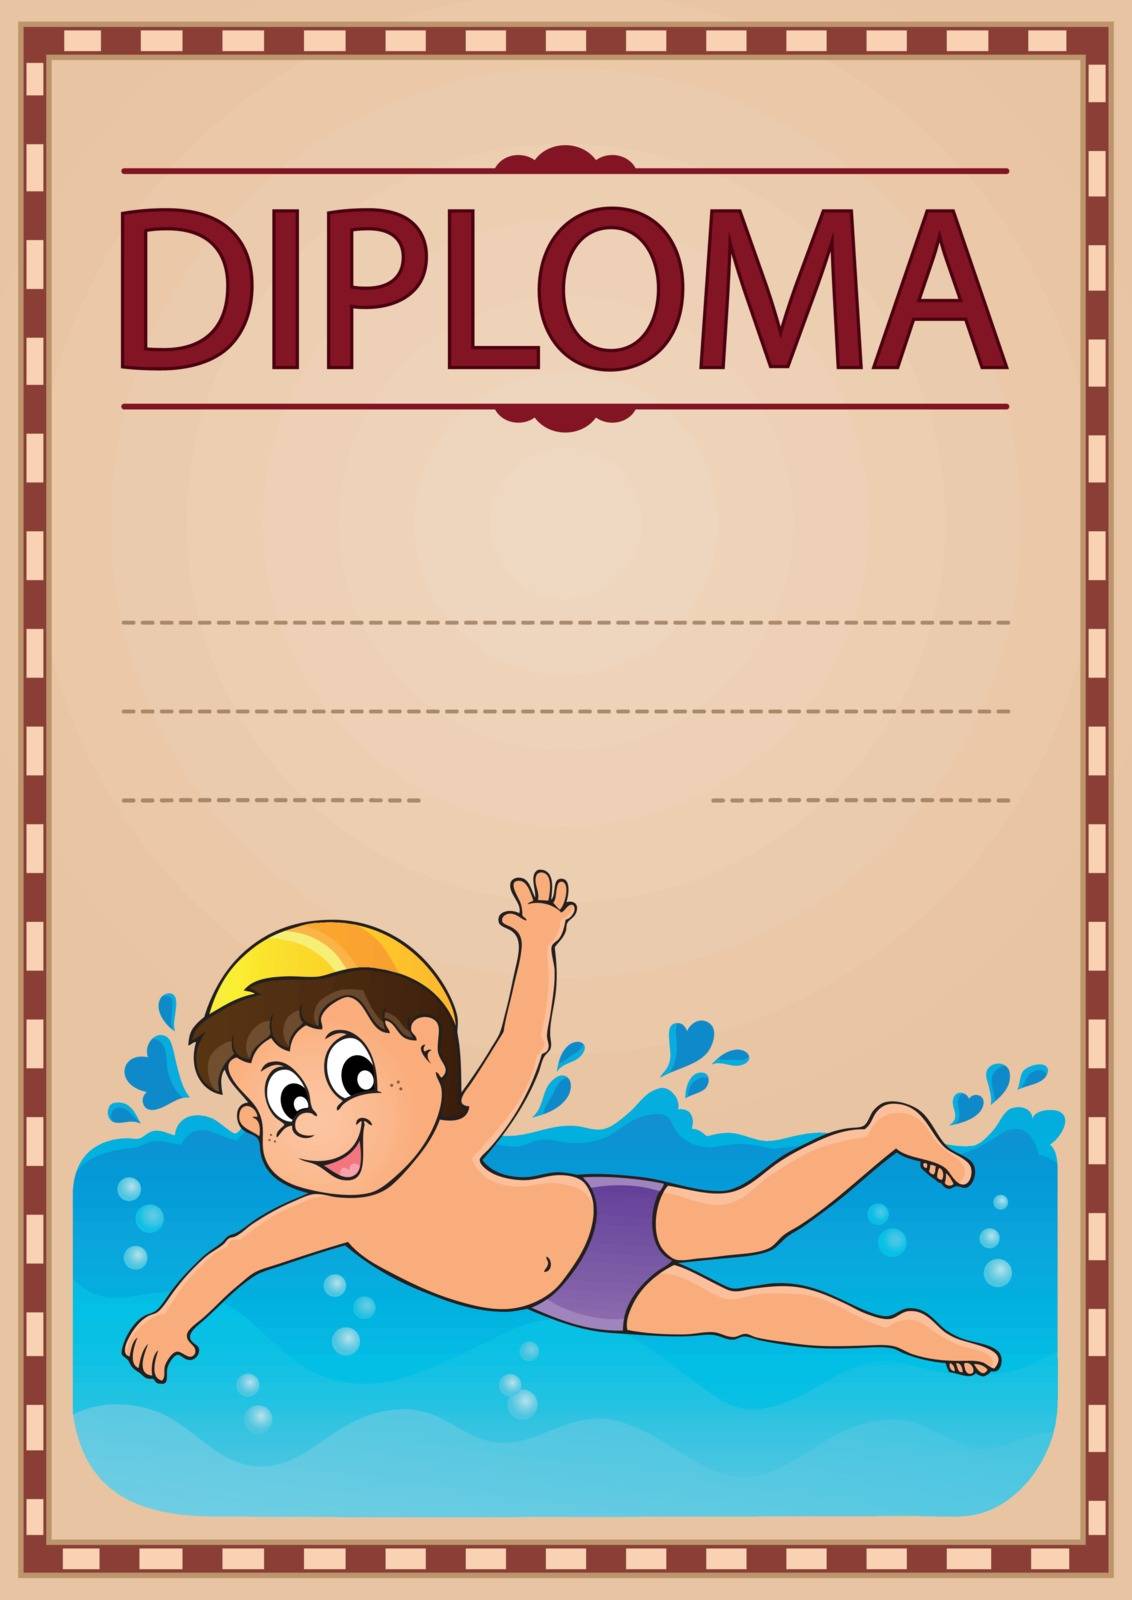 Diploma theme image 5 - eps10 vector illustration.